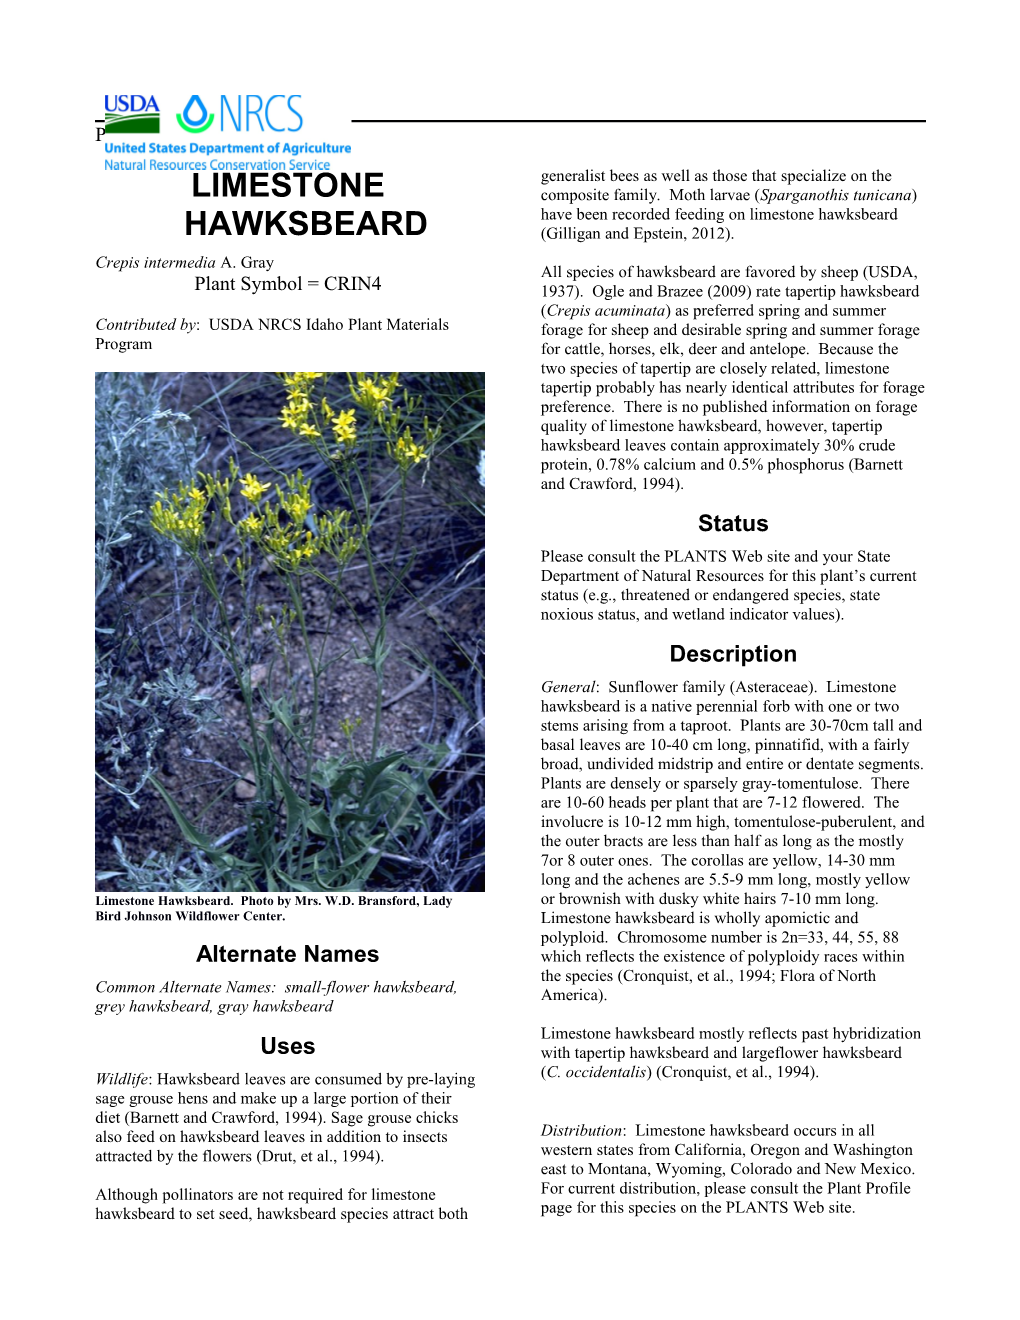 Plant Guide for Limestone Hawksbeard (Crepis Intermedia)